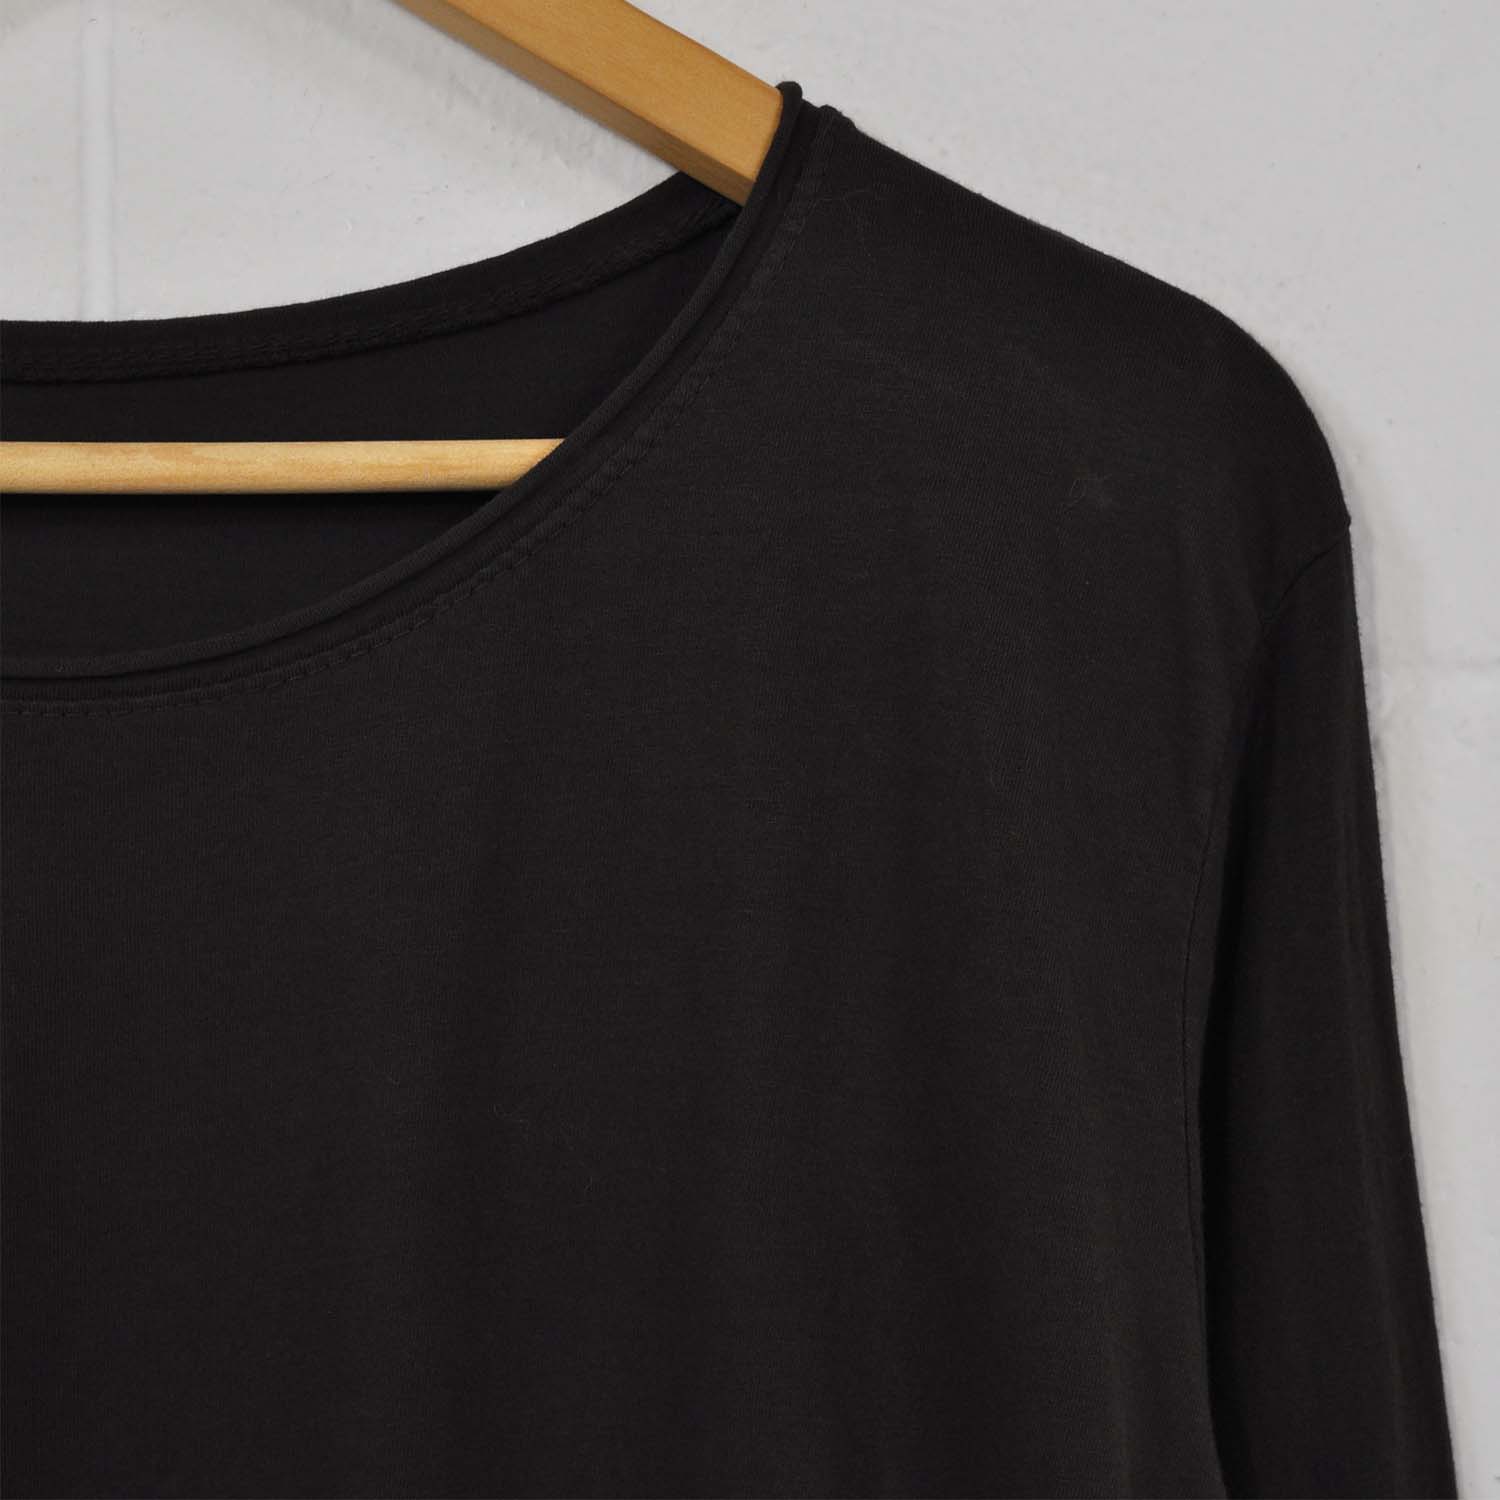 Black asymmetric basic t-shirt